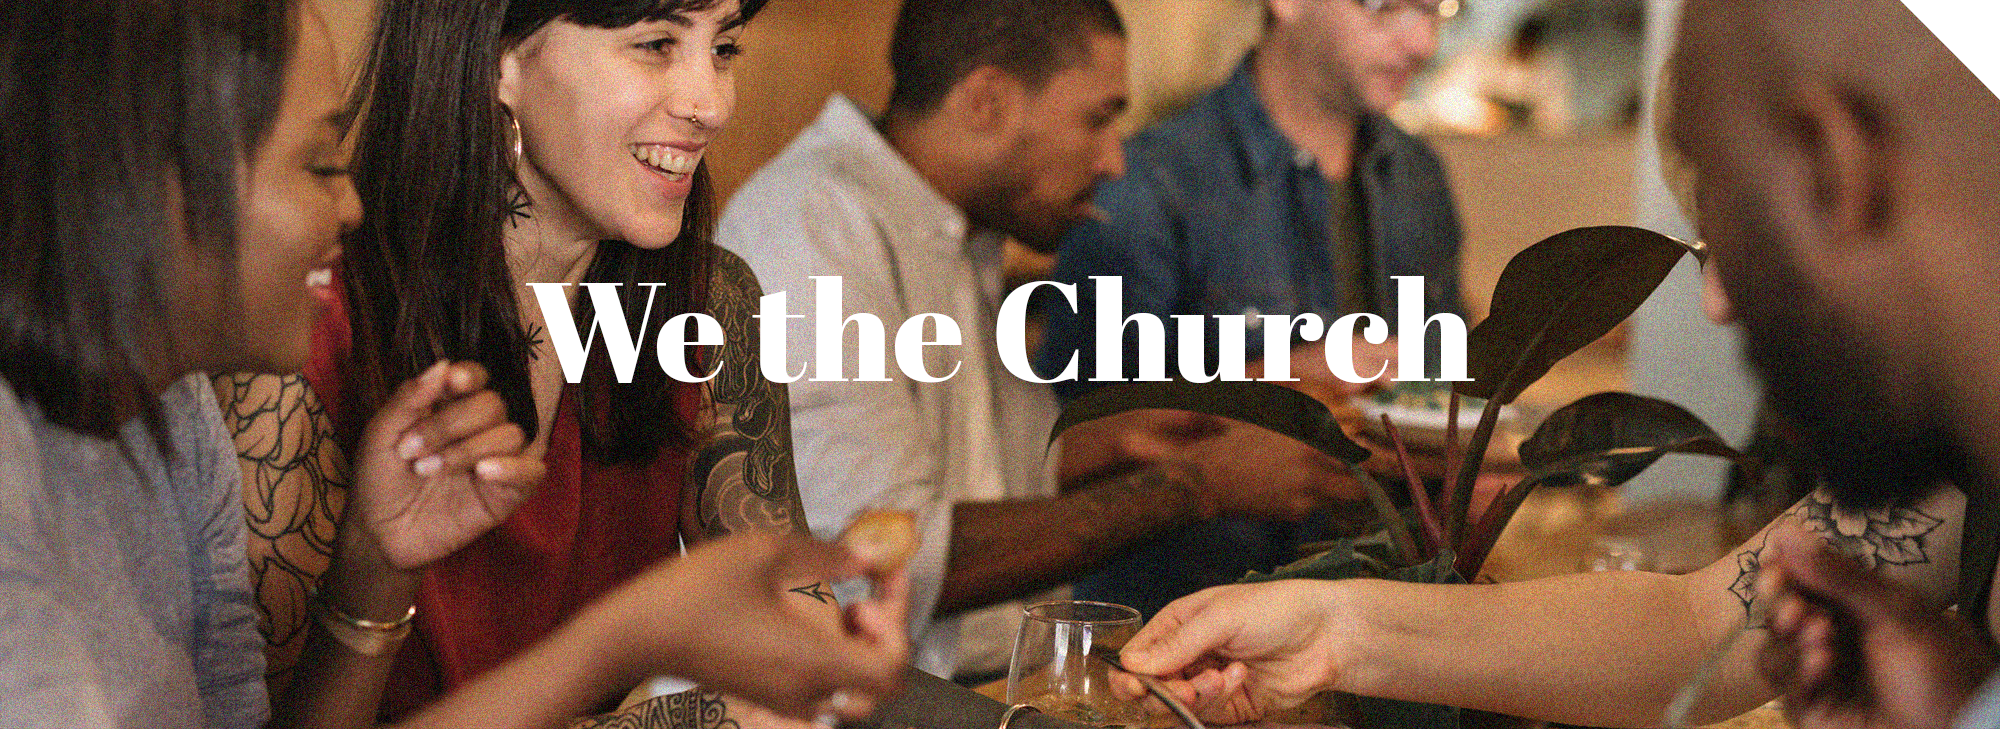 Church—Prayer, worship, and community